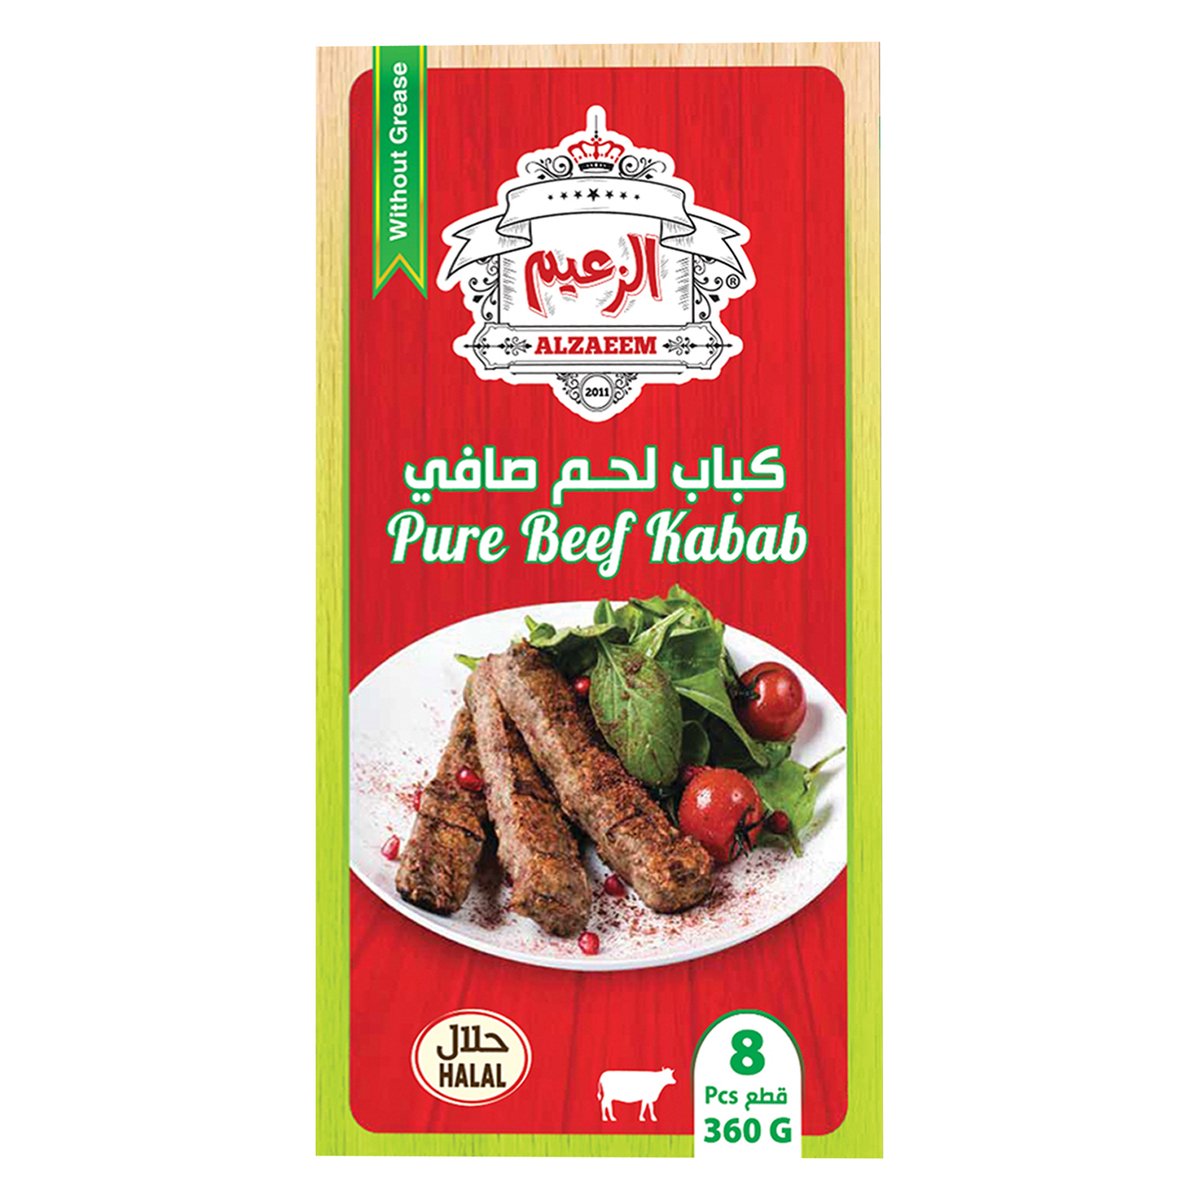 Al Zaeem Pure Beef Kabab 8pcs 360g